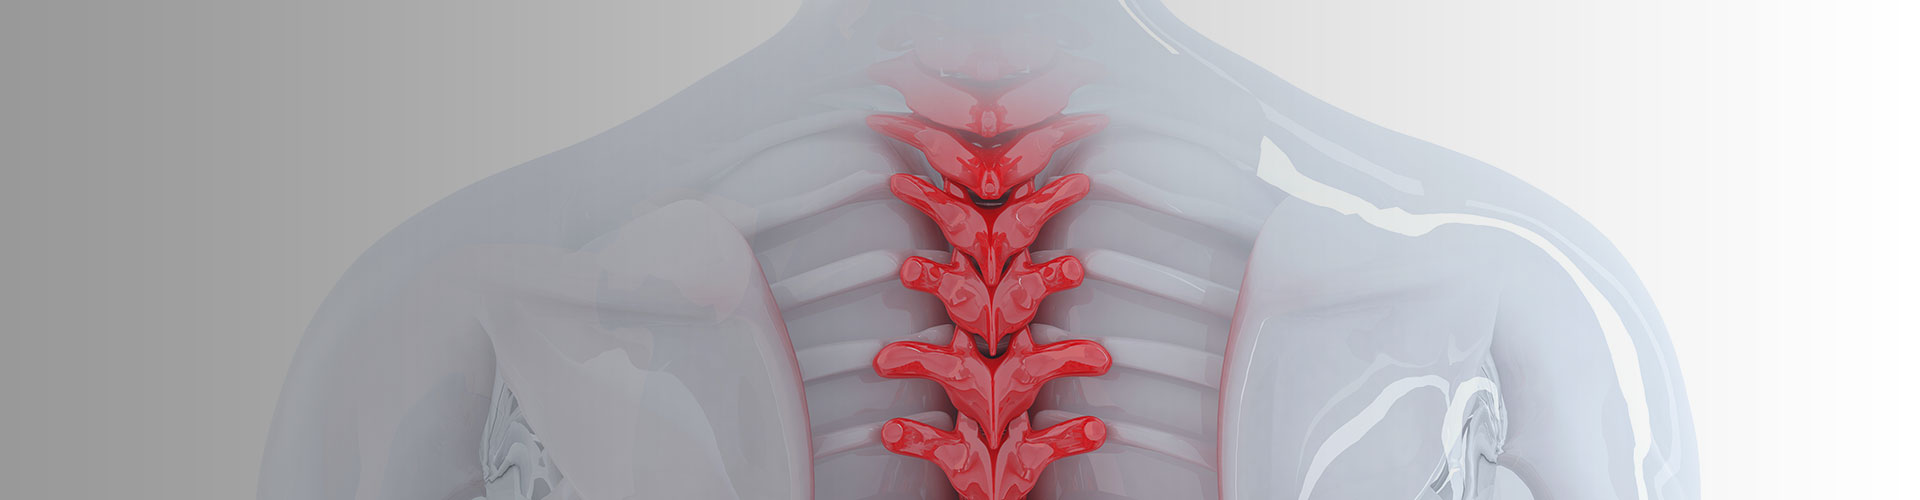 spinal cord controls bladder